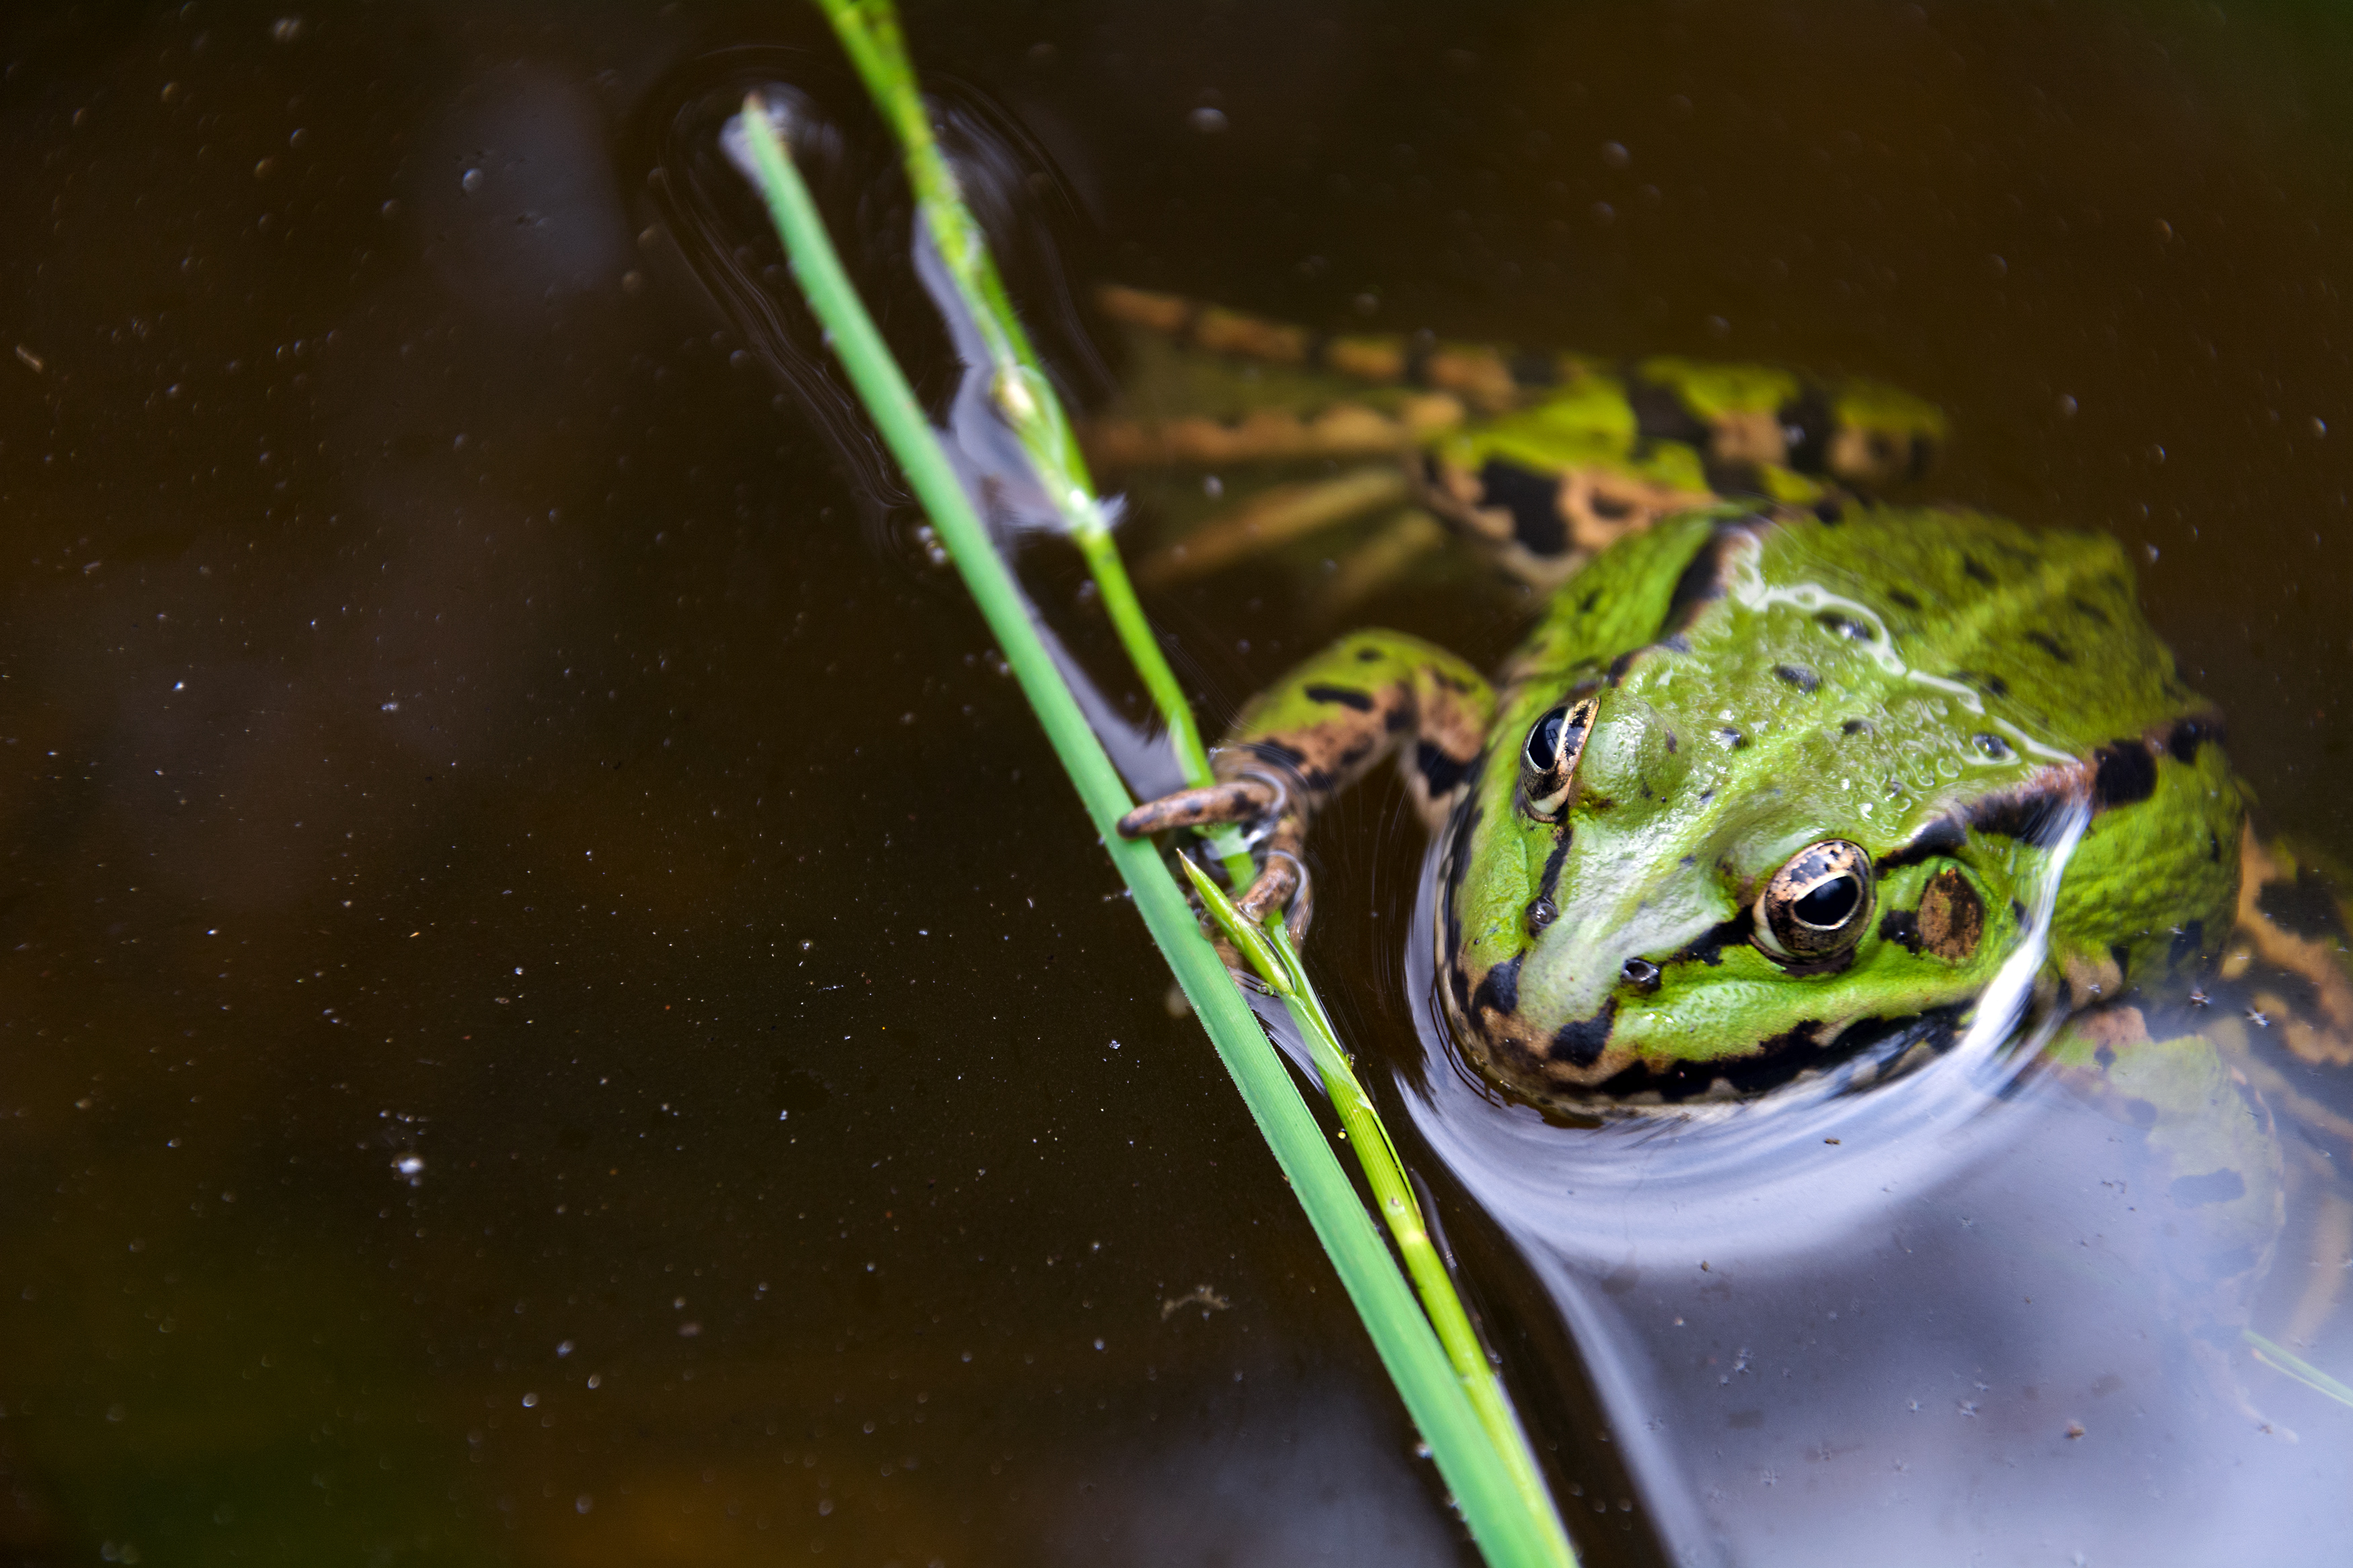 Free Image: Green Frog | Libreshot Public Domain Photos